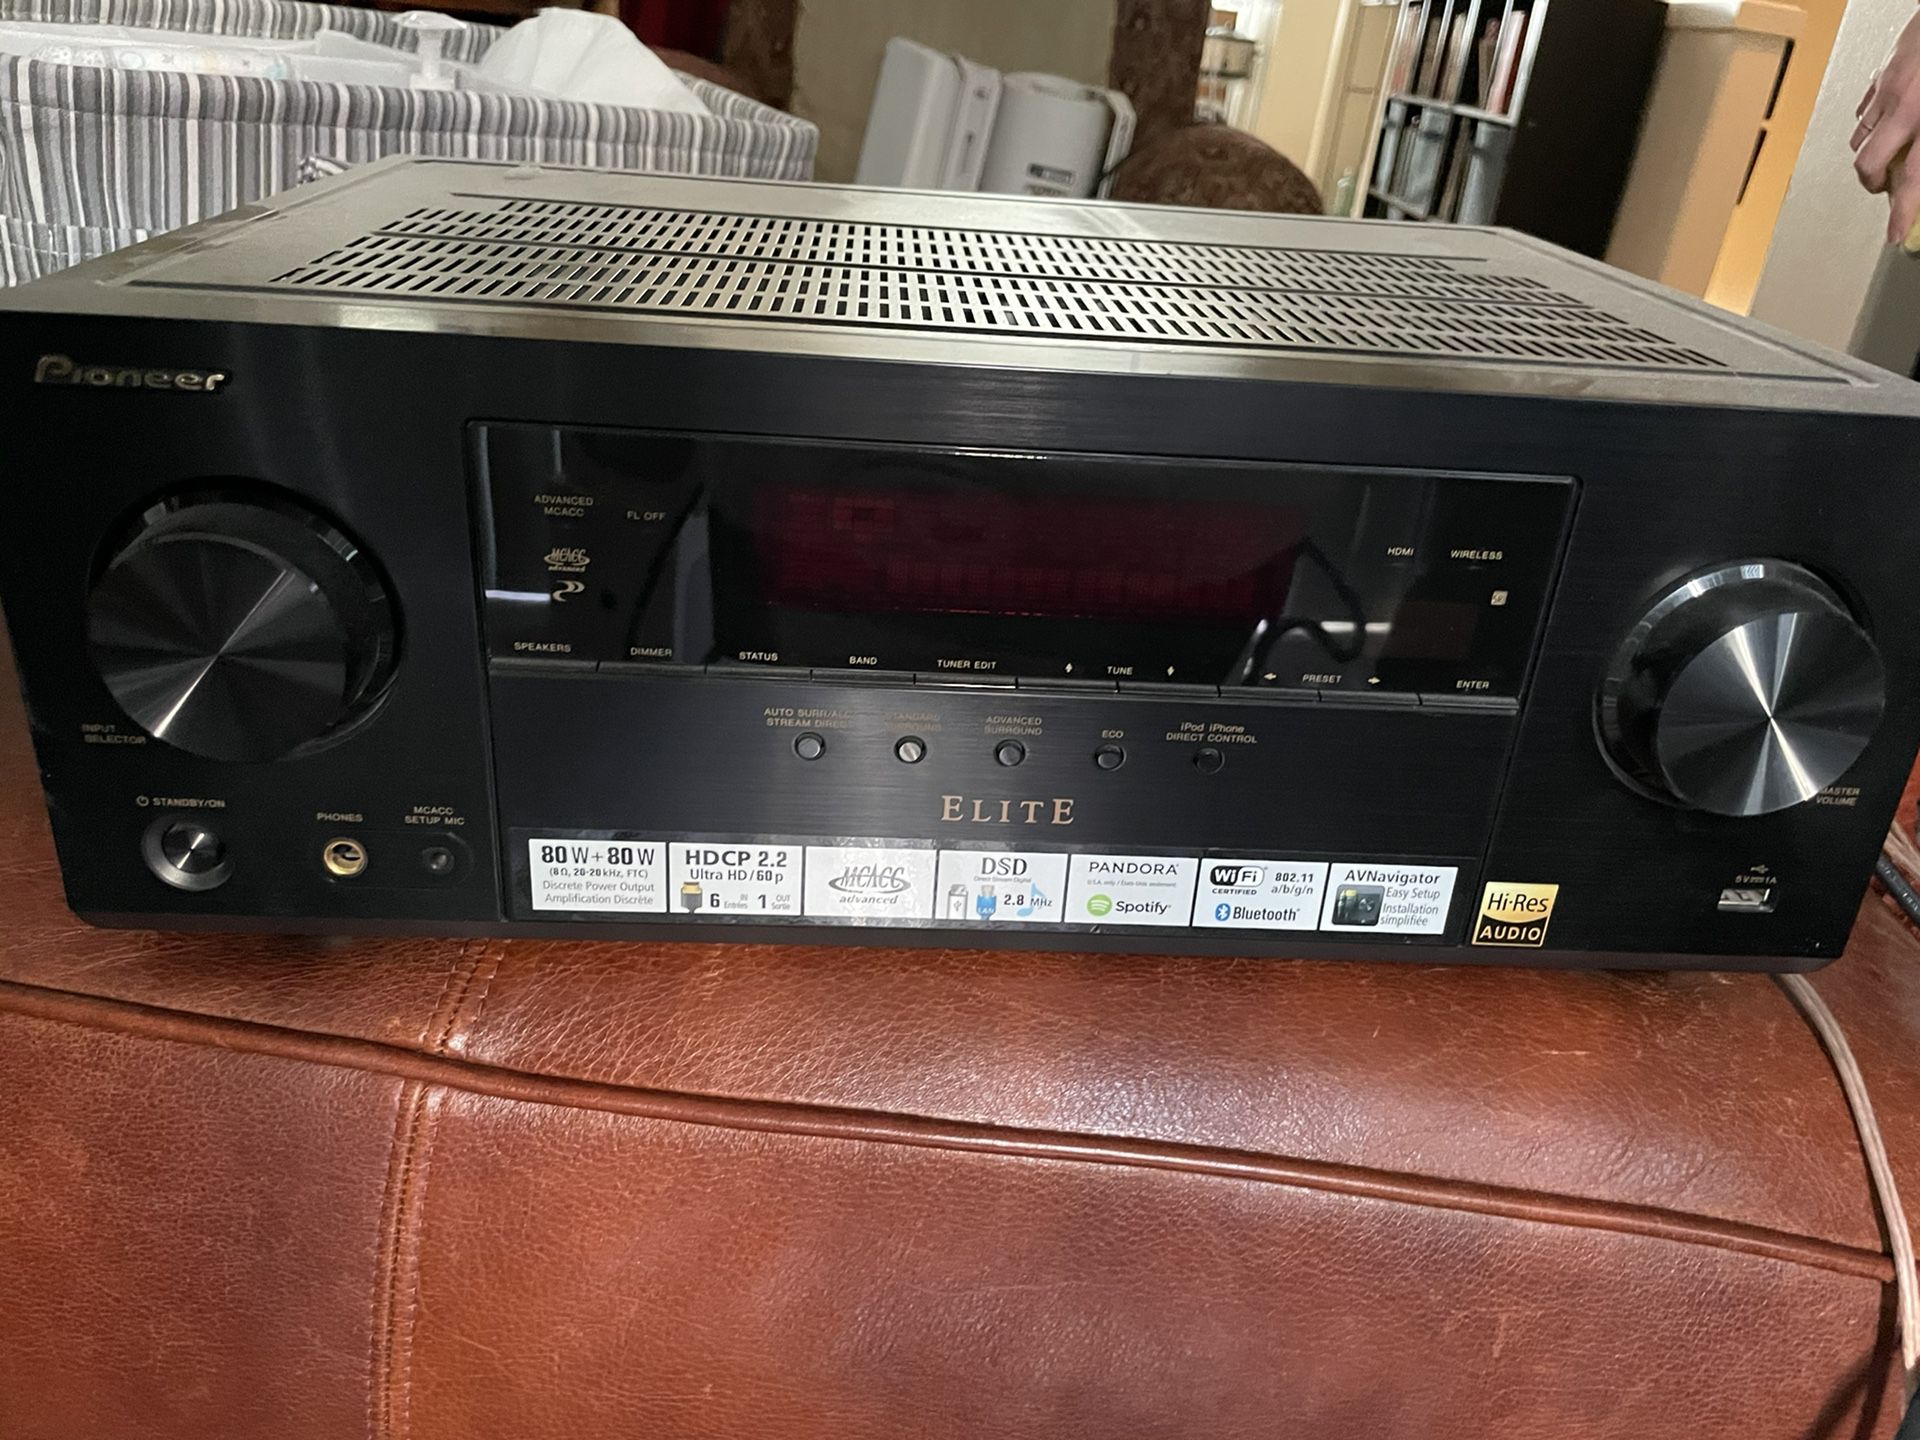 Vsx-45 pioneer elite entertainment receiver